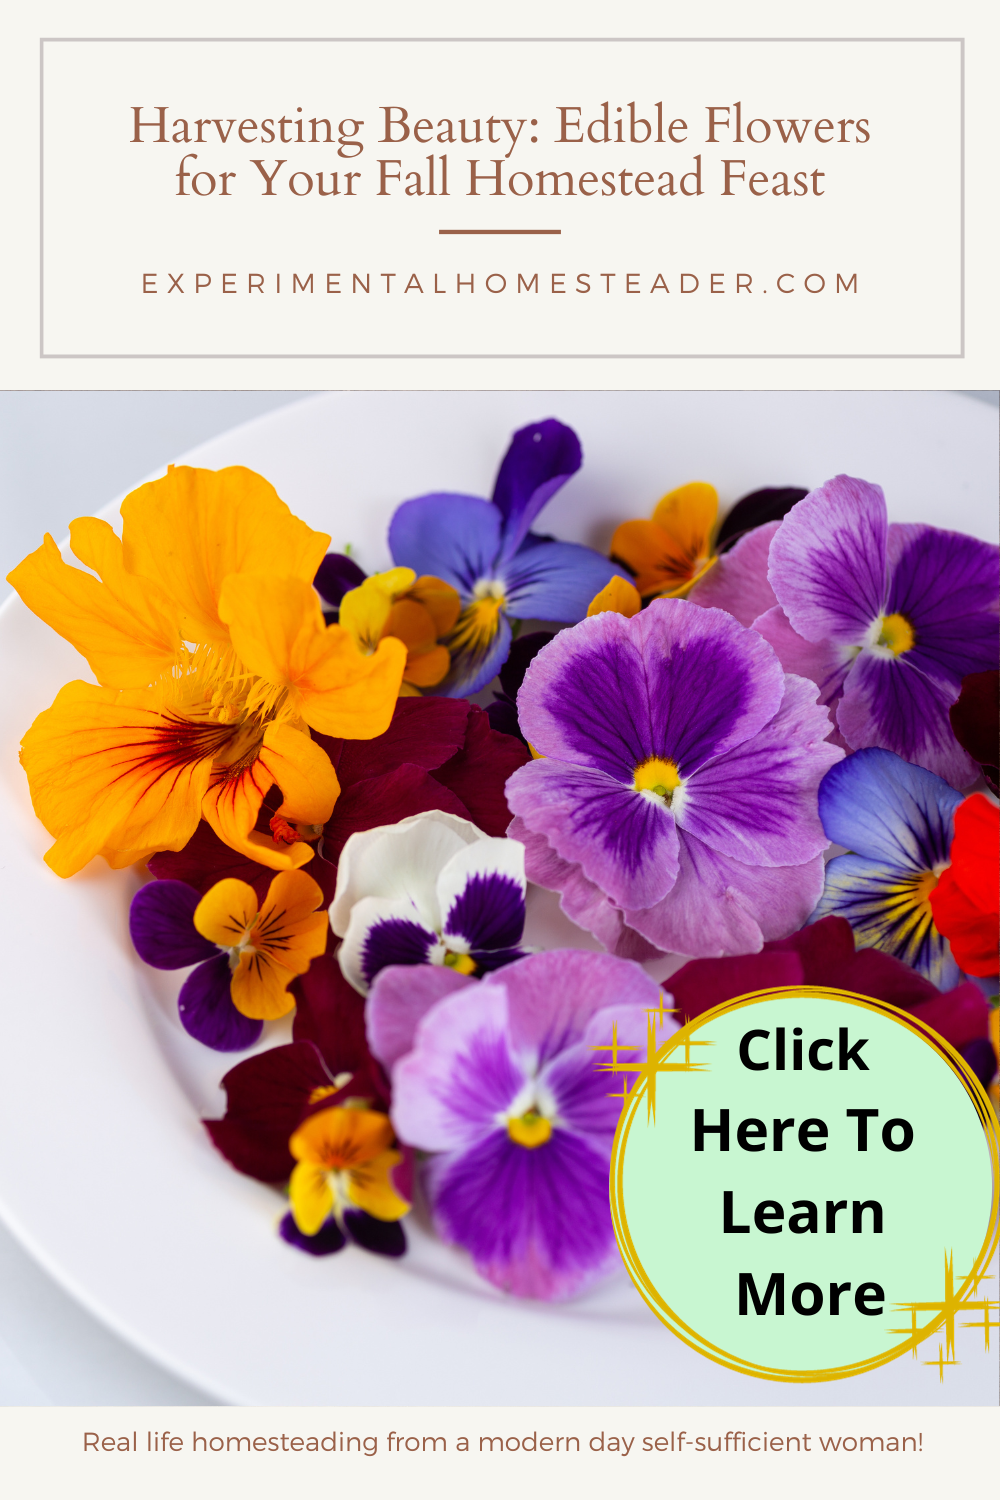 Edible flowers like violas, nasturtiums and pansies on a plate.